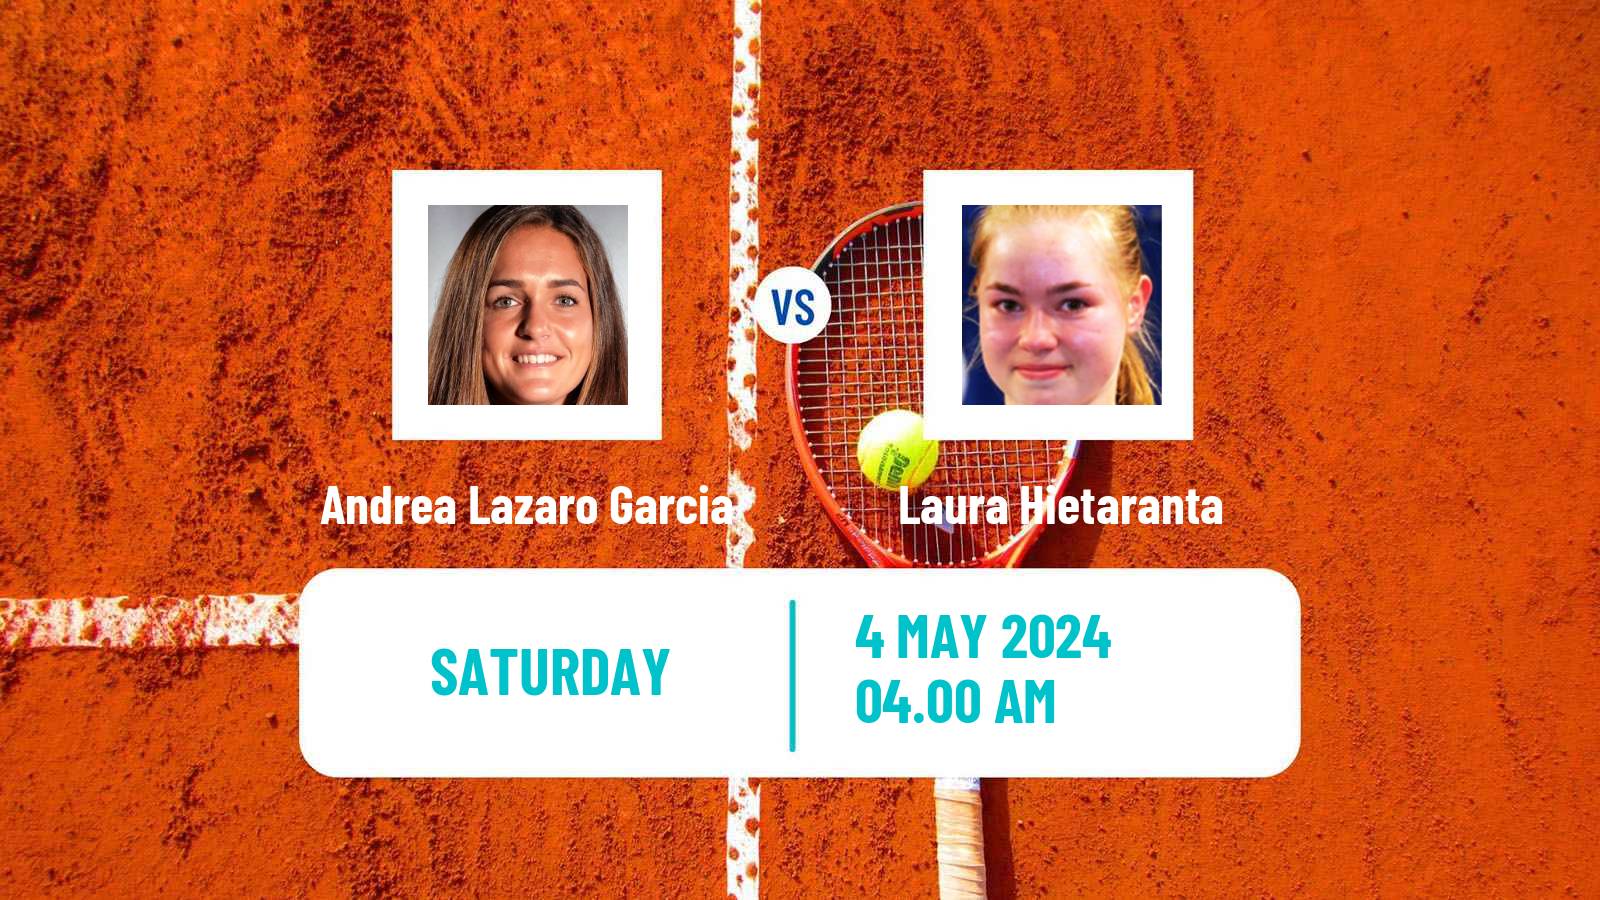 Tennis ITF W35 Santa Margherita Di Pula 6 Women Andrea Lazaro Garcia - Laura Hietaranta